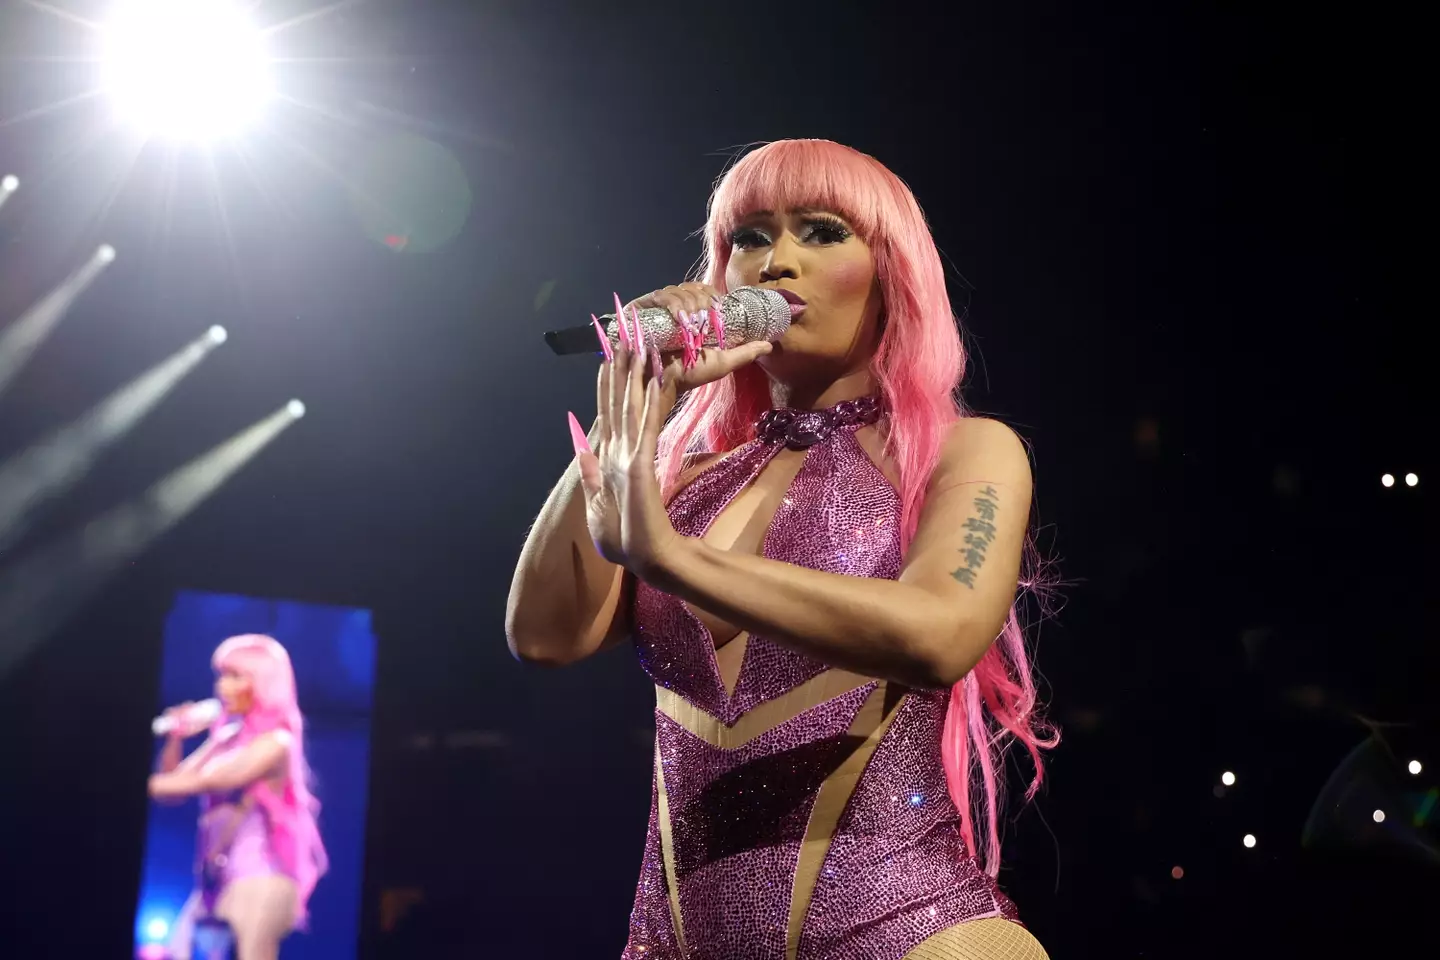 The singer has 'hit back at trolls' during her Birmingham concert. (Kevin Mazur/Getty Images for Live Nation)